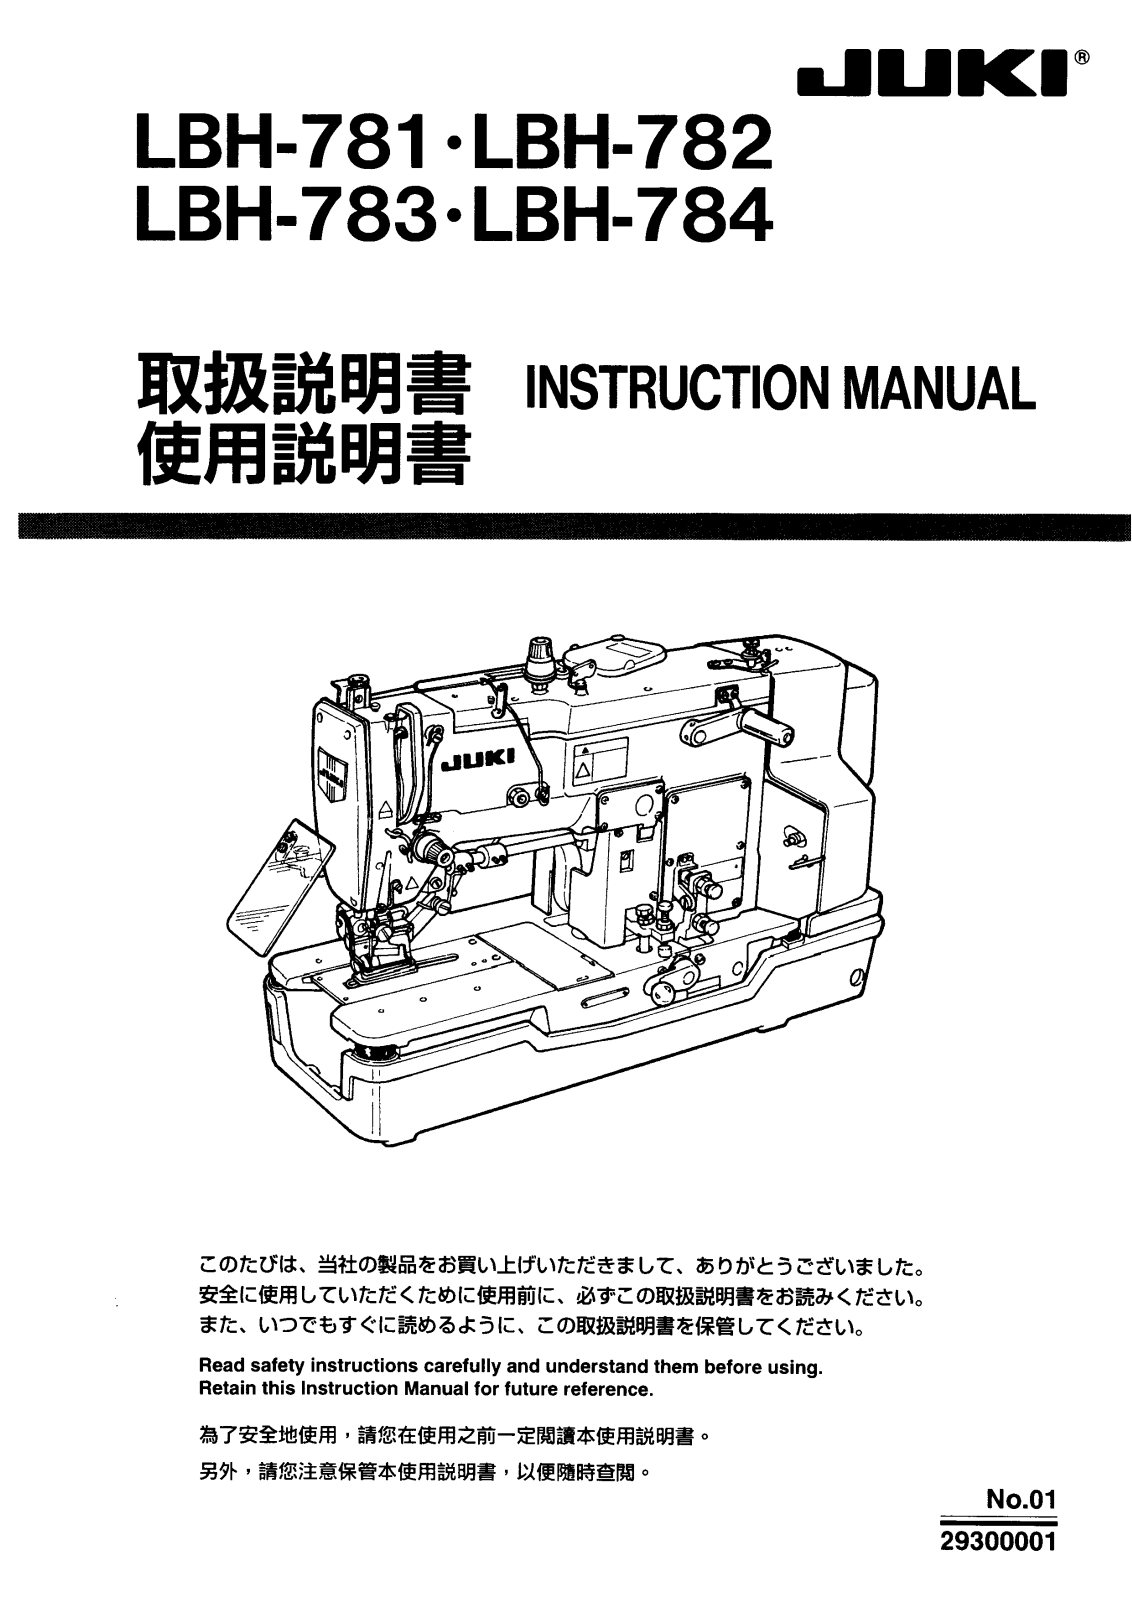 JUKI LBH-781, LBH-782, LBH-783, LBH-784 INSTRUCTION Manual